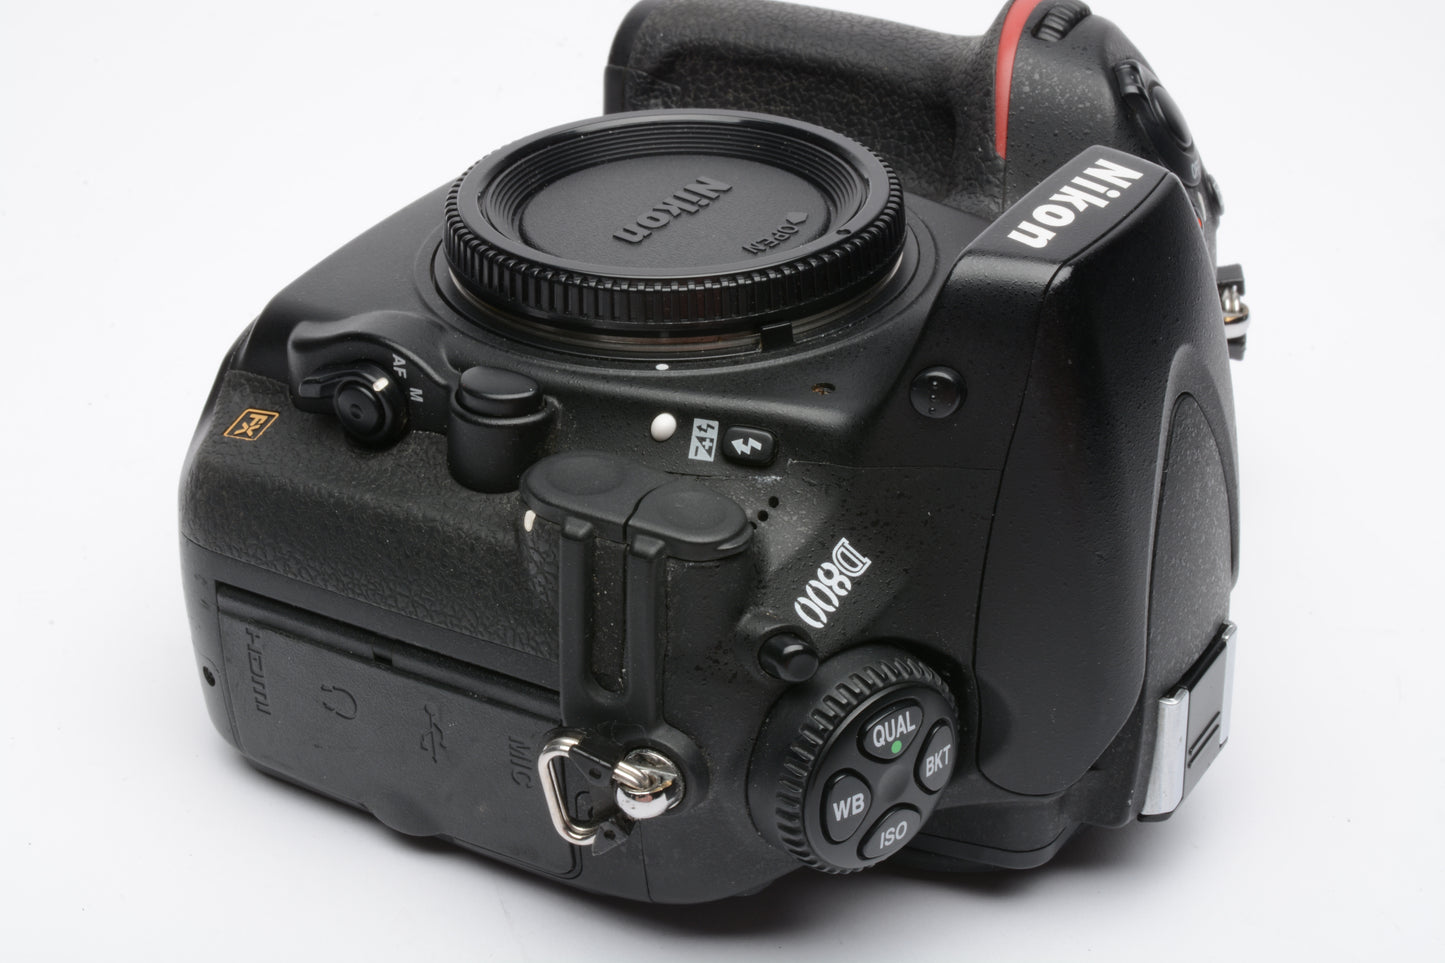 Nikon D800 DSLR body, USA version, batt+charger+manual, only 8661 Acts!